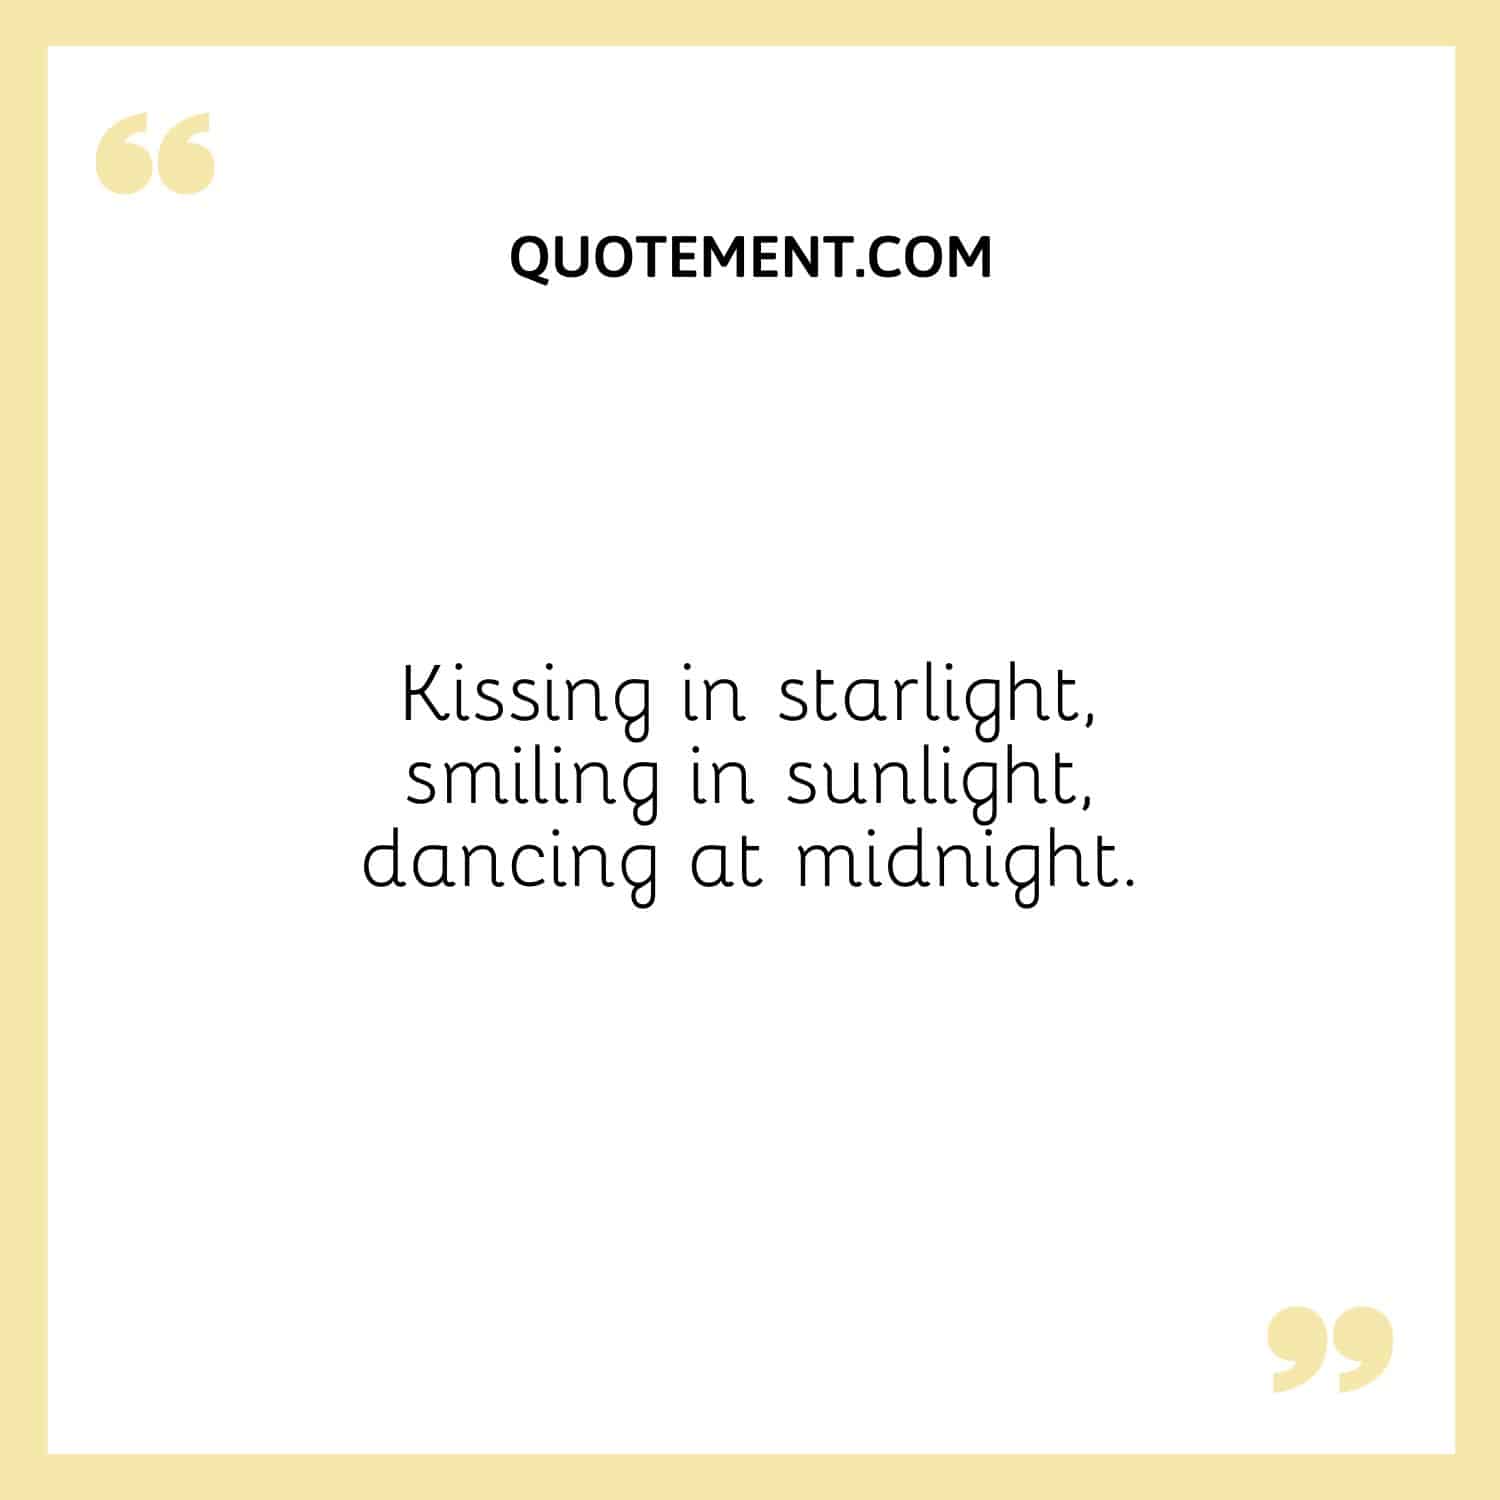 Kissing in starlight, smiling in sunlight, dancing at midnight.